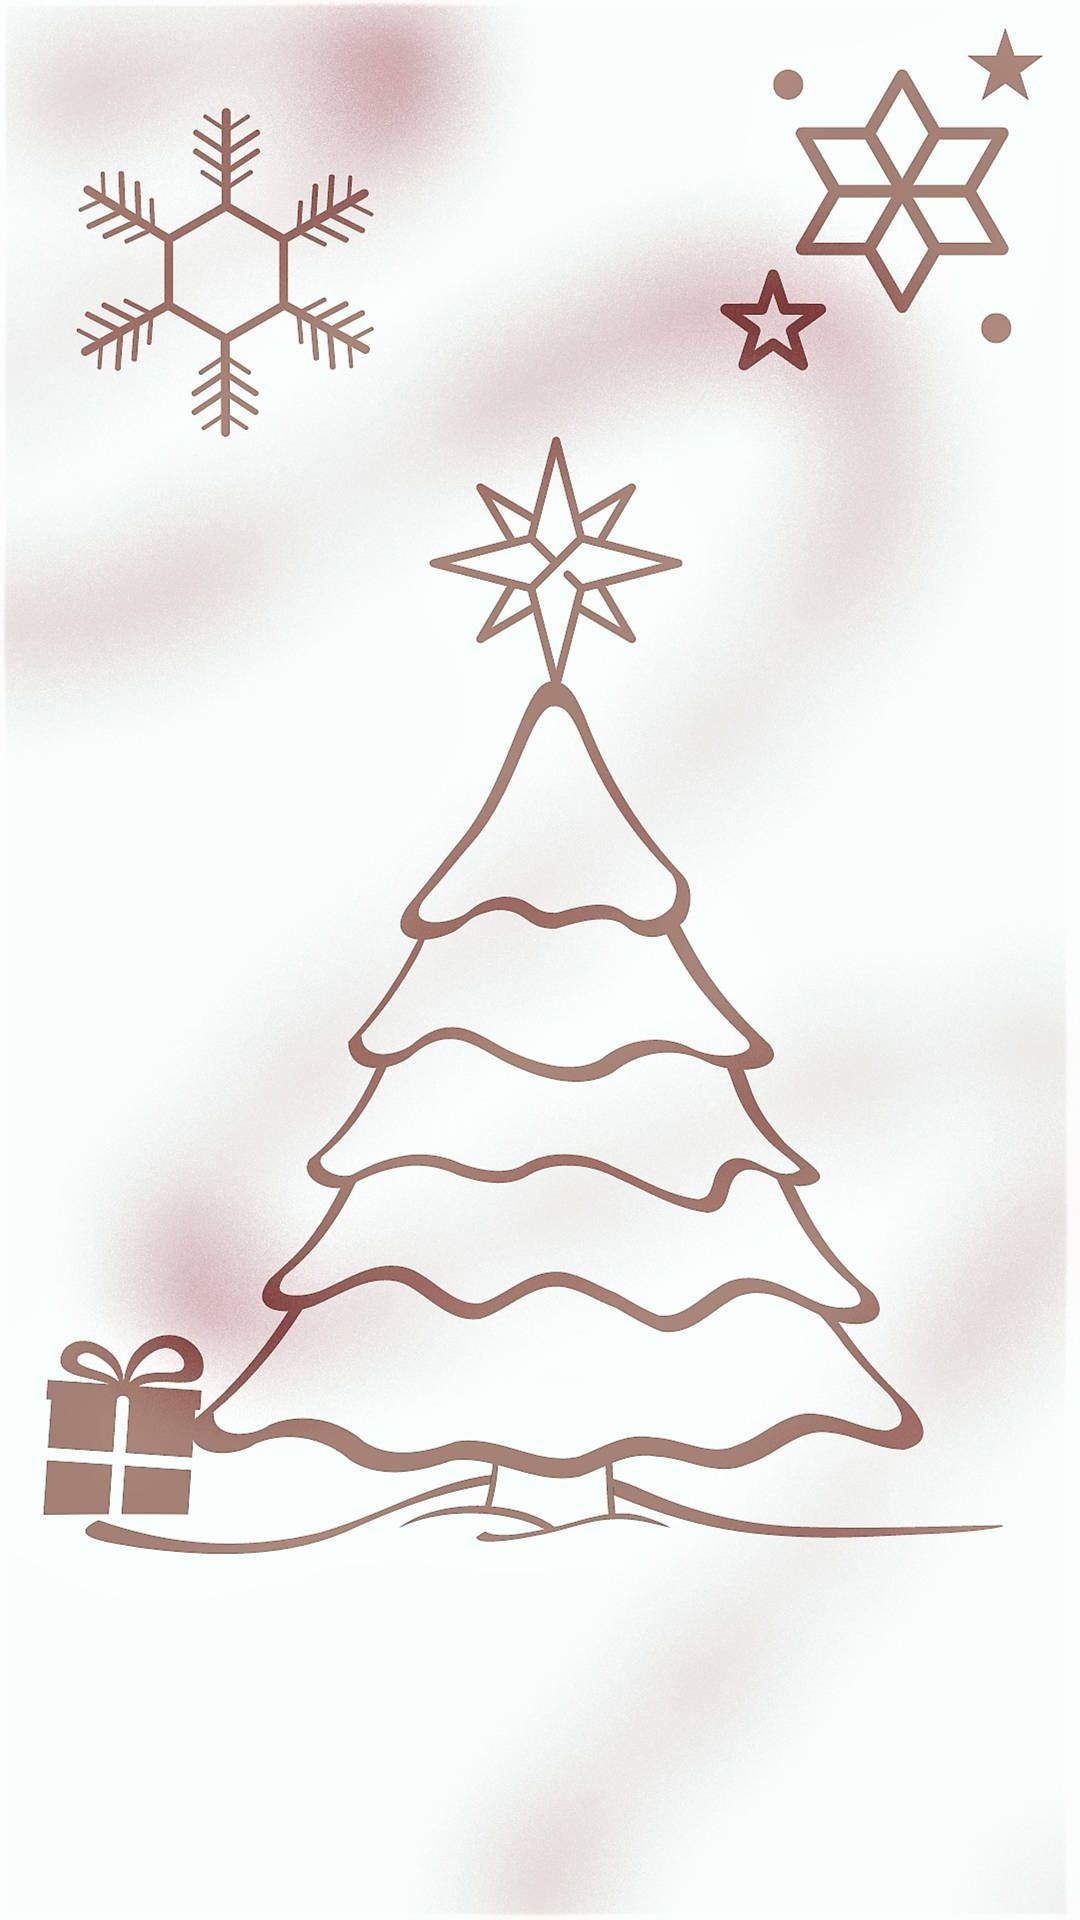 A christmas tree with presents and snowflakes - Christmas, white Christmas